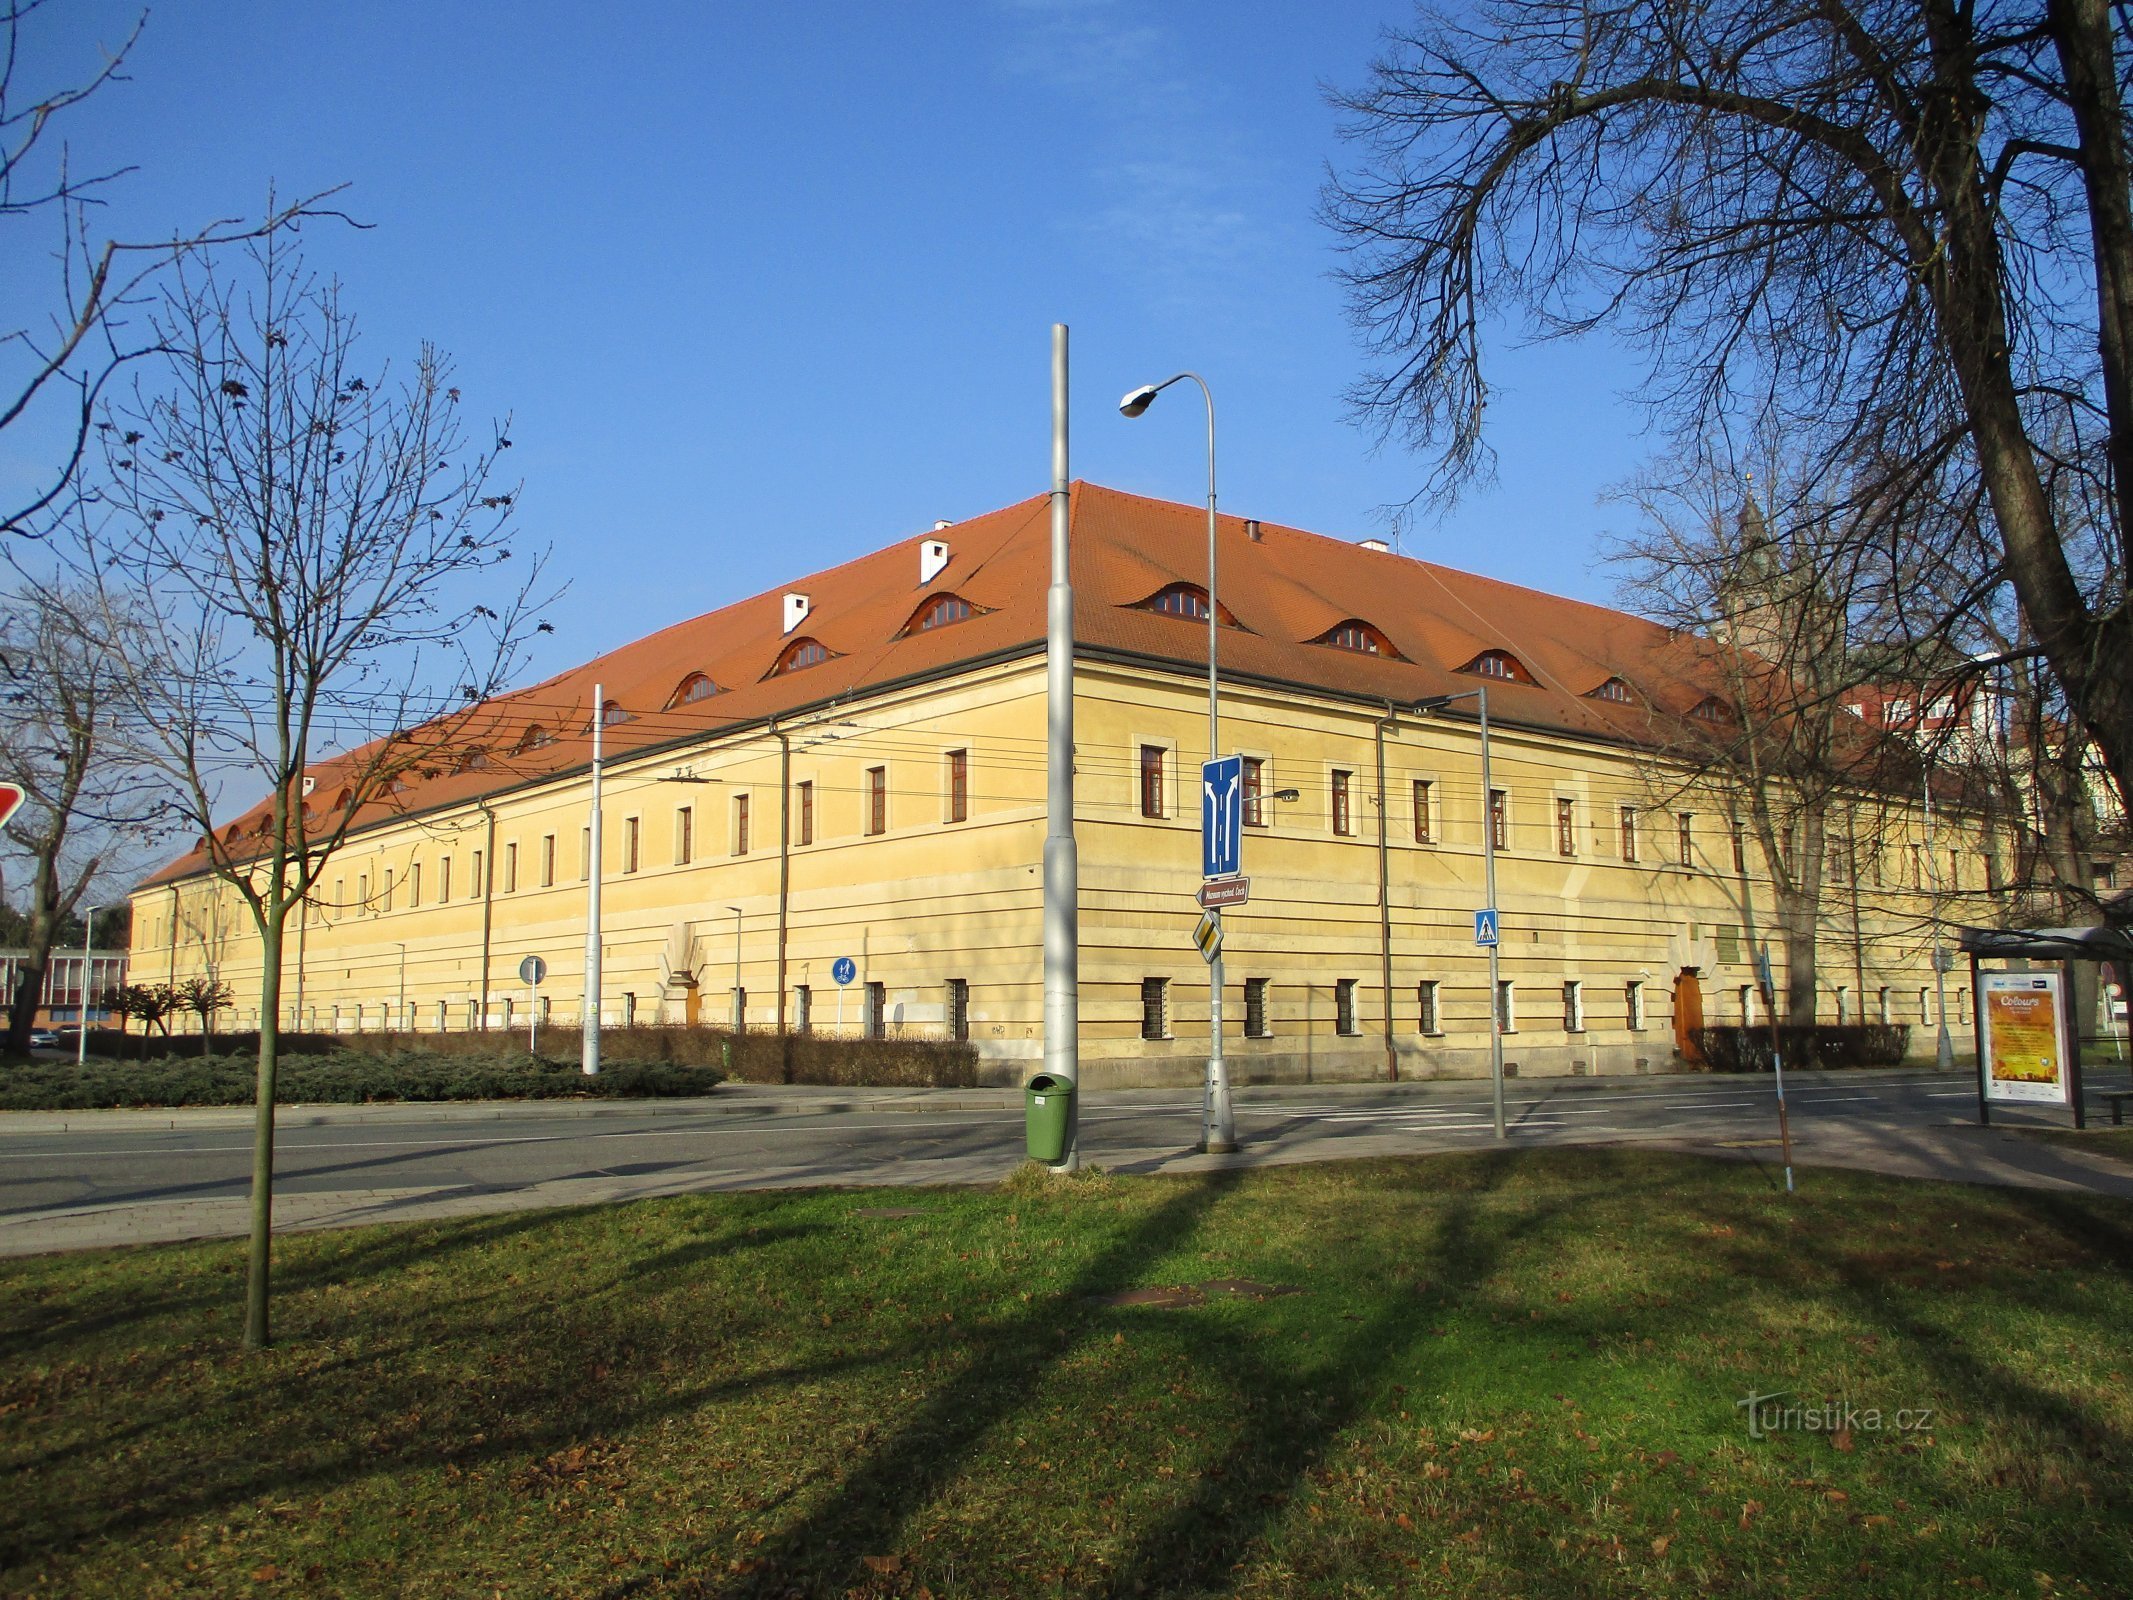 Ancienne caserne de cavalerie (Hradec Králové, 9.2.2020 février XNUMX)